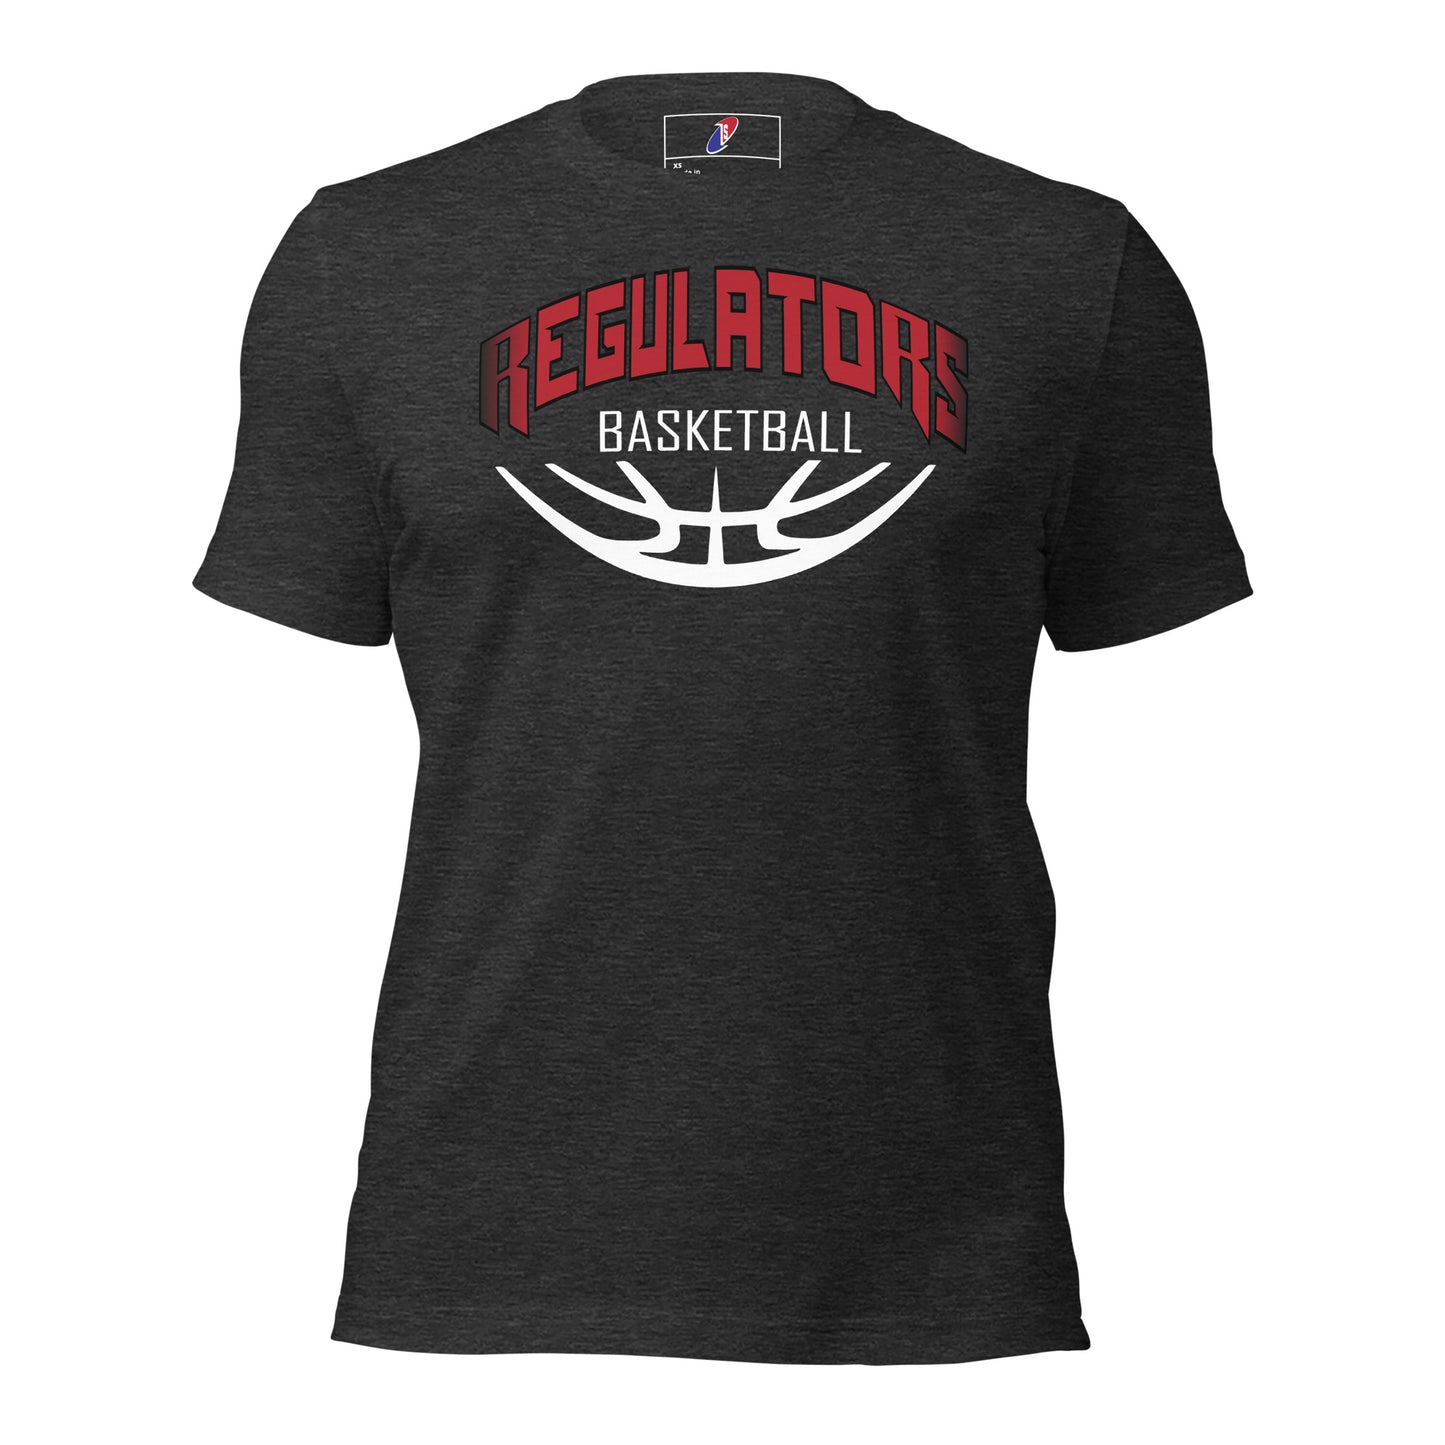 Regulators Unisex t-shirt